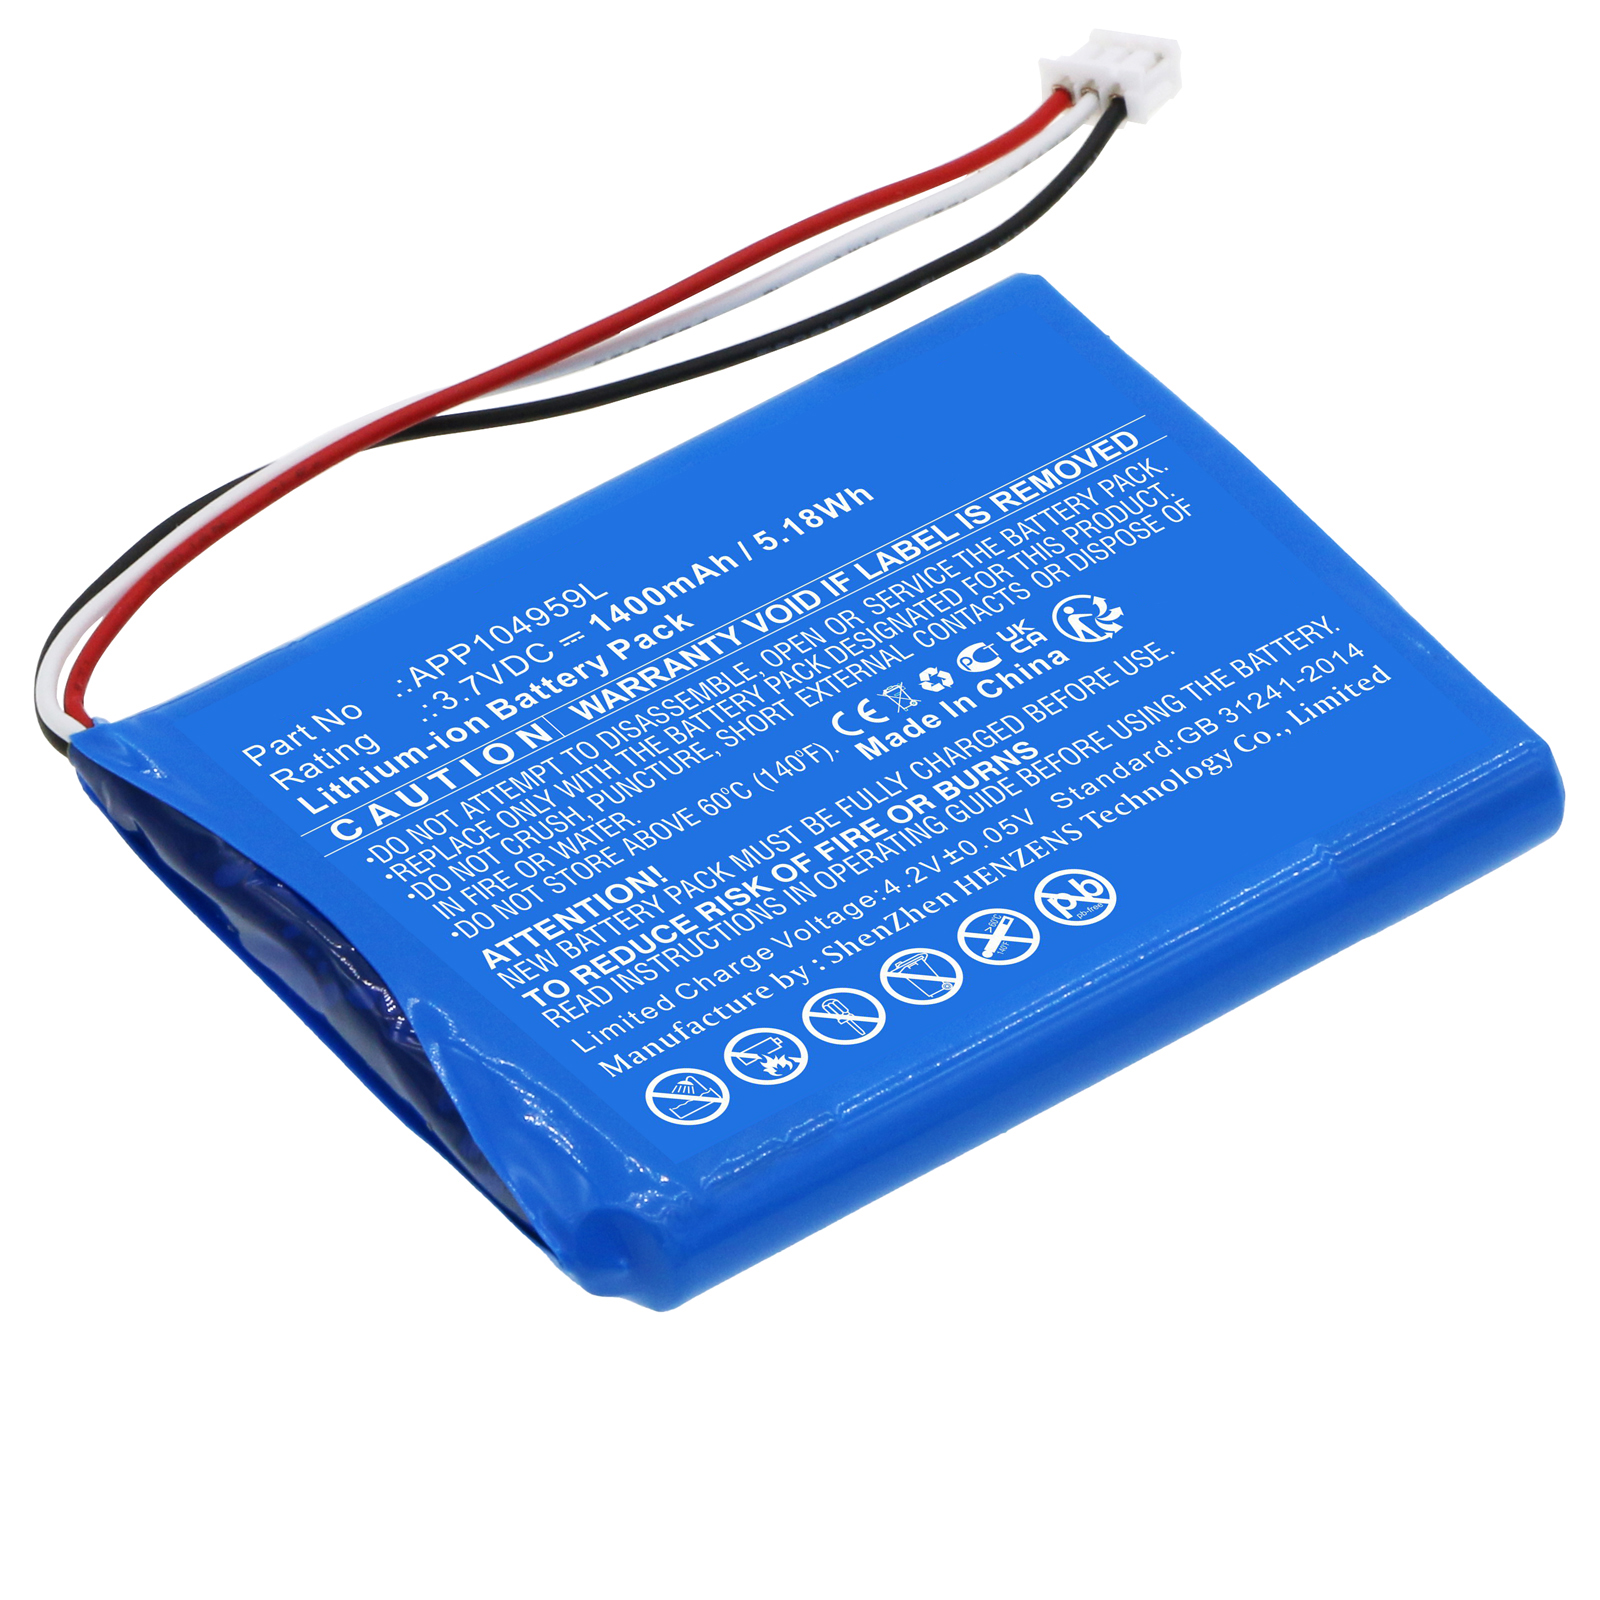 Synergy Digital Amplifier Battery, Compatible with VentureCraft APP104959L Amplifier Battery (Li-ion, 3.7V, 1400mAh)